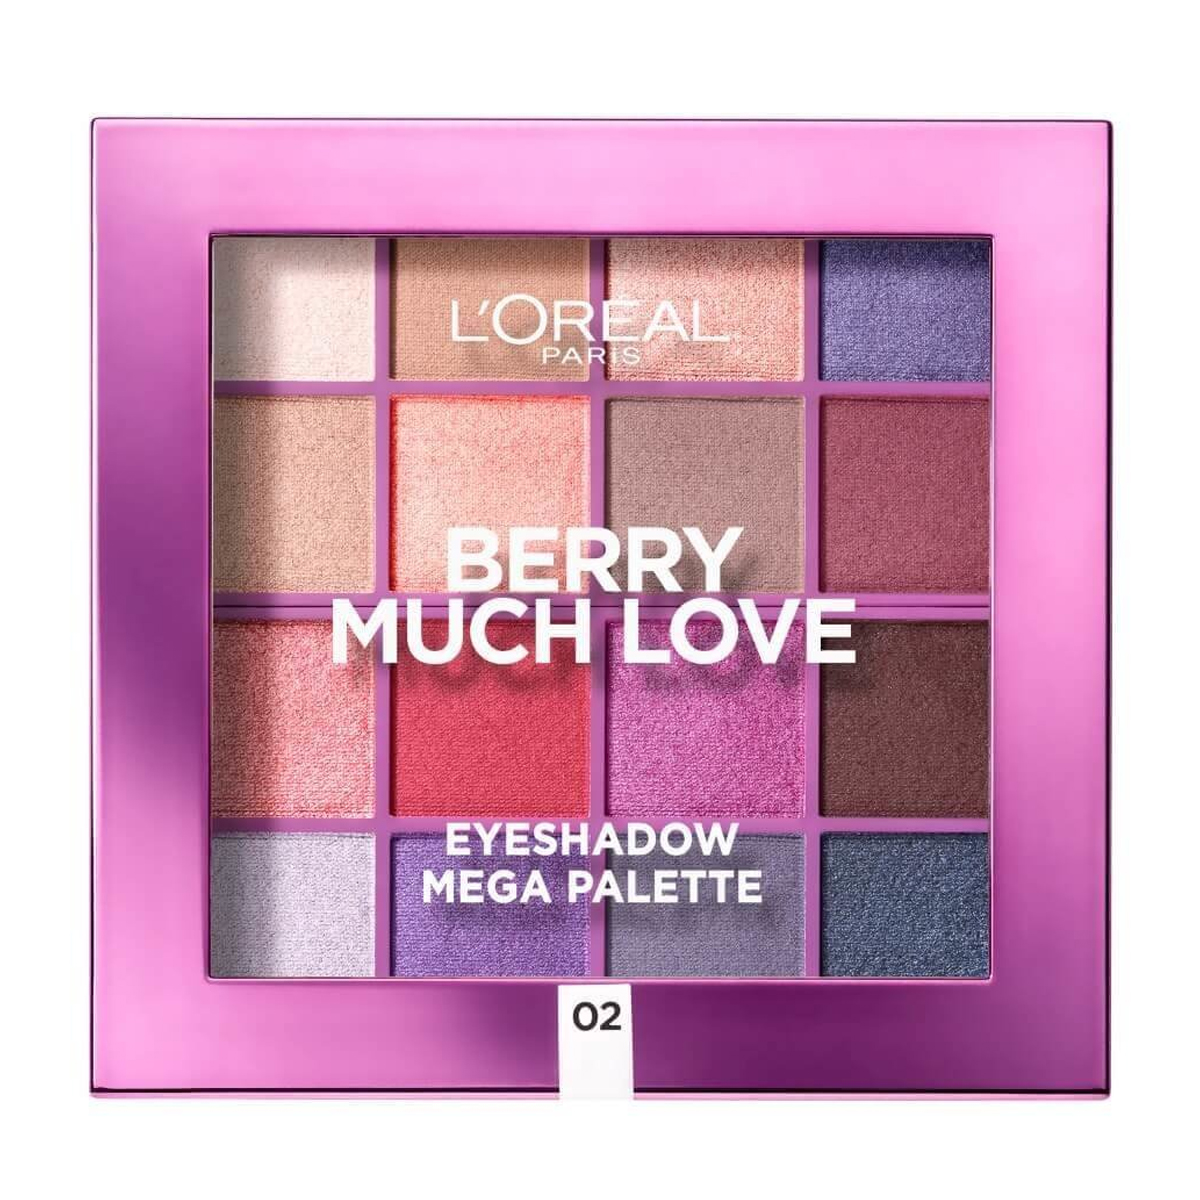 L'Oréal Berry Much Love Eyeshadow Mega Palette Far Paleti